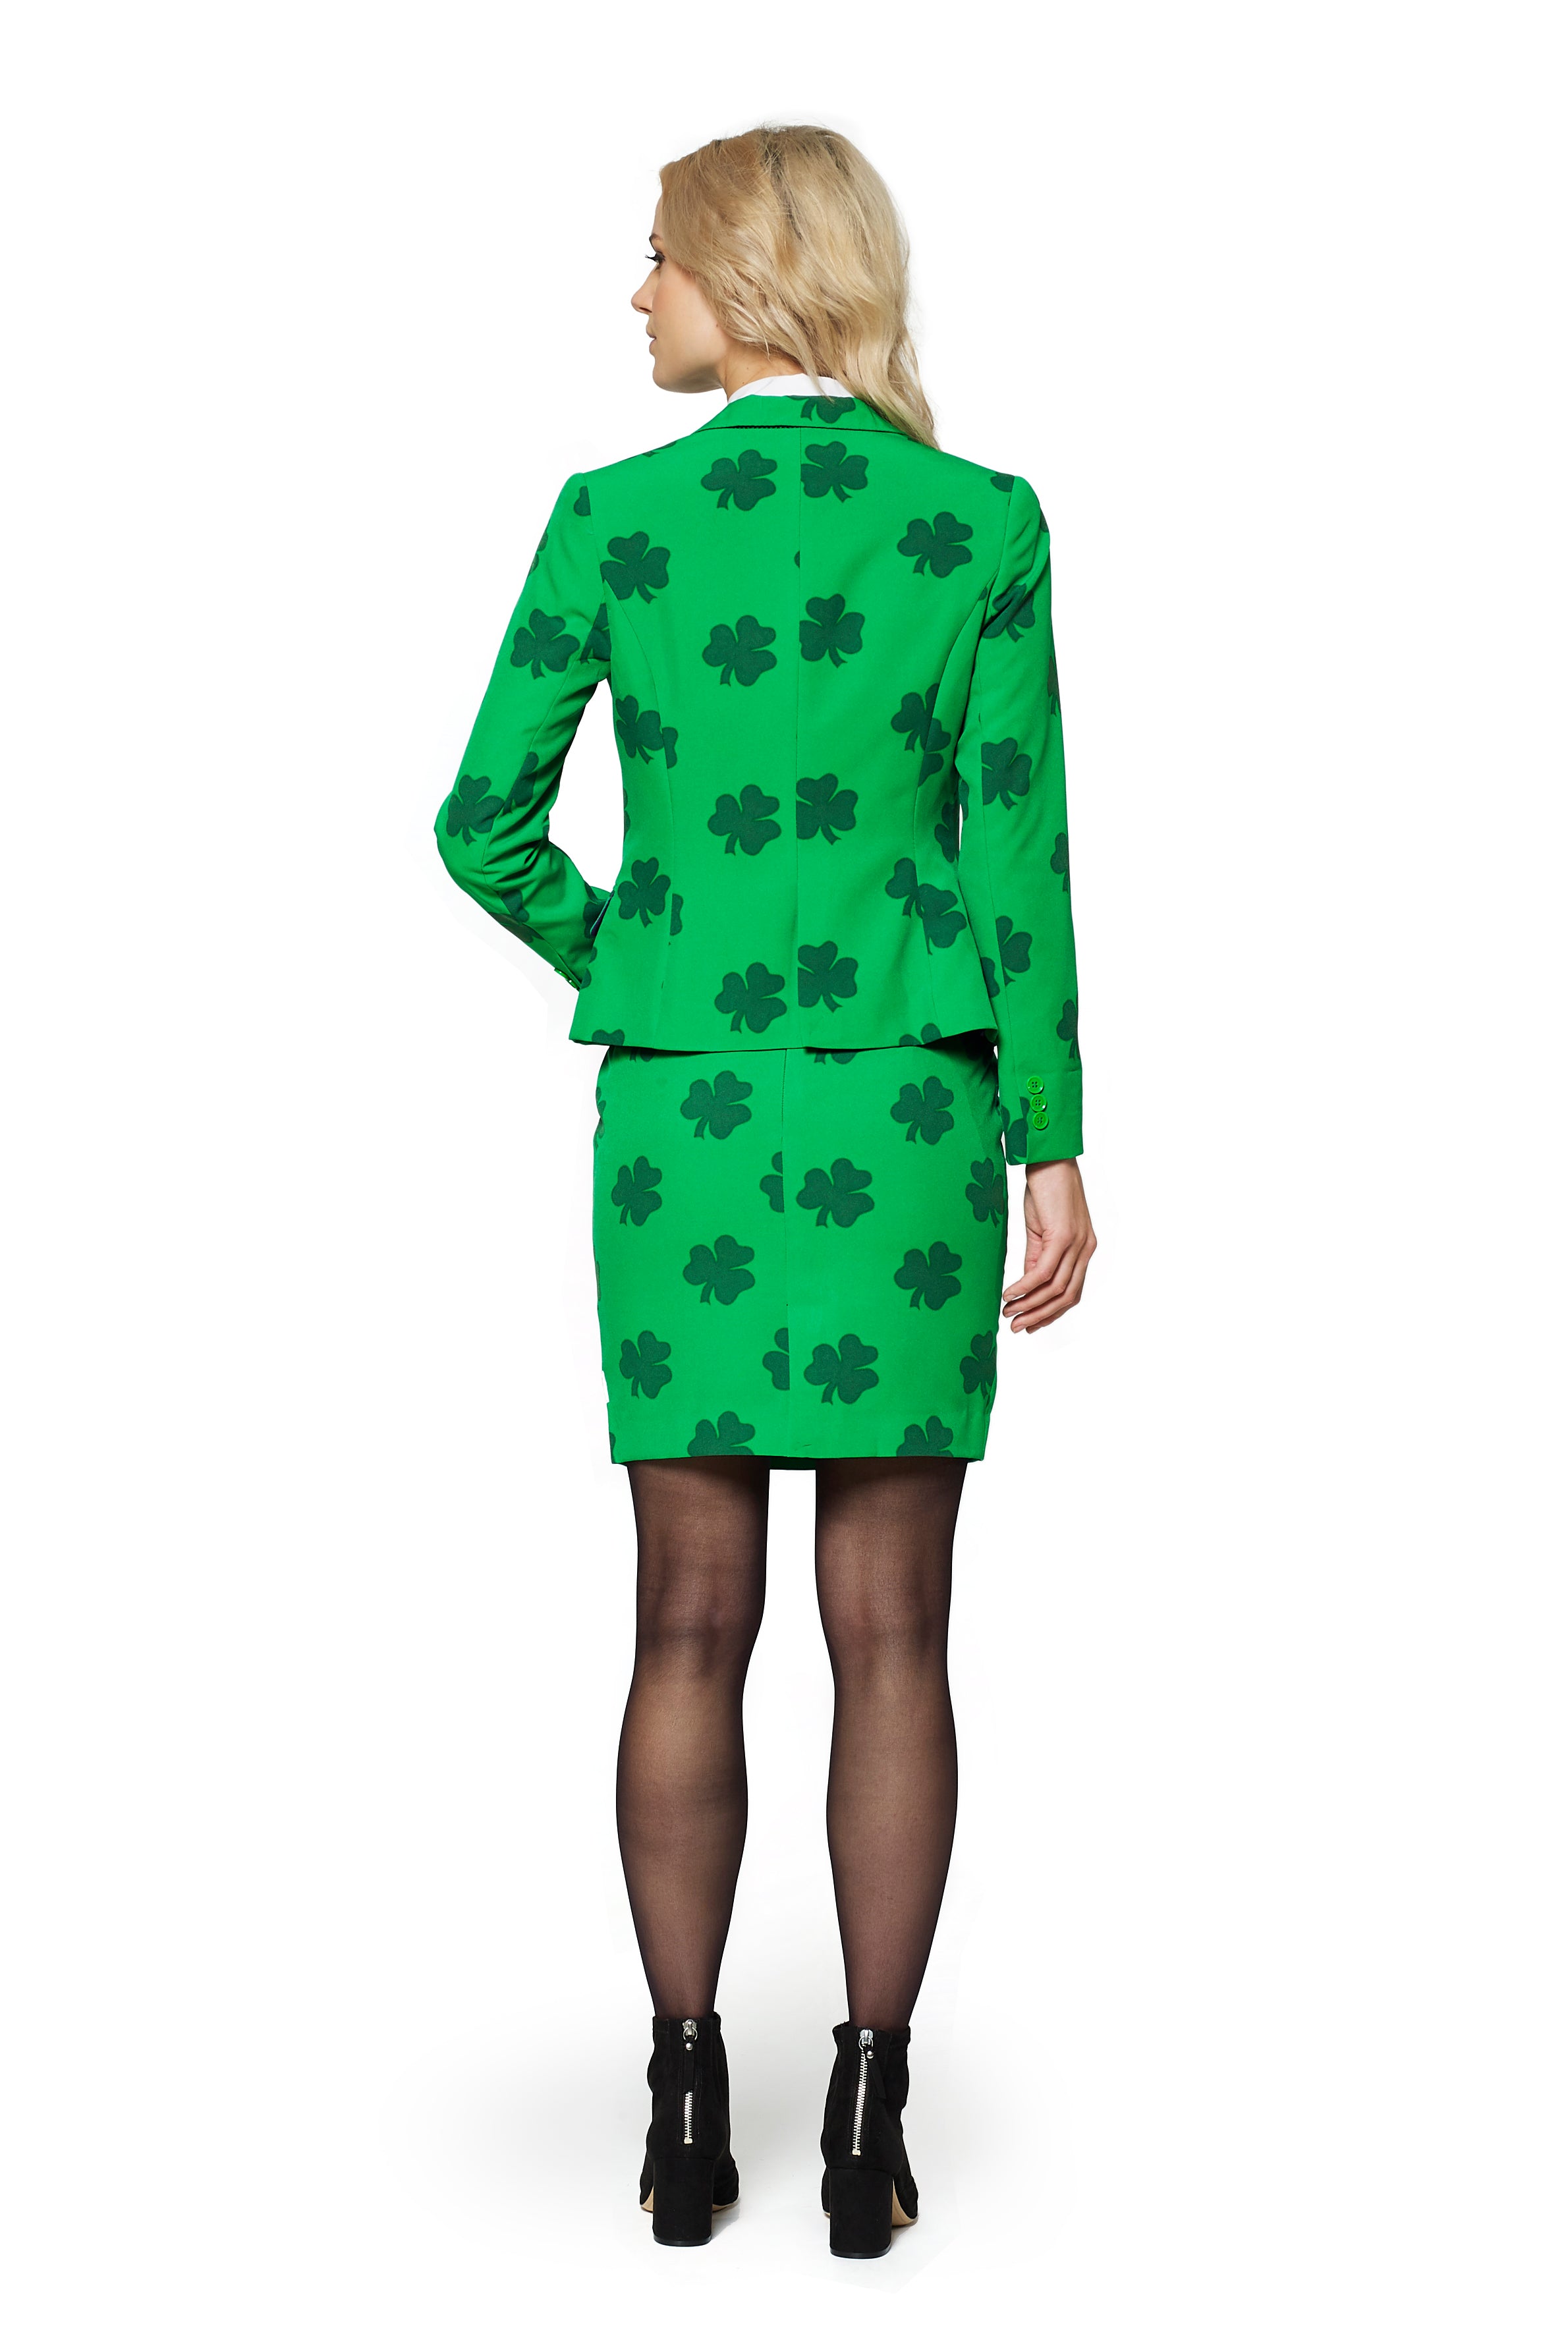 Costume OppoSuits St. Patrick's Girl